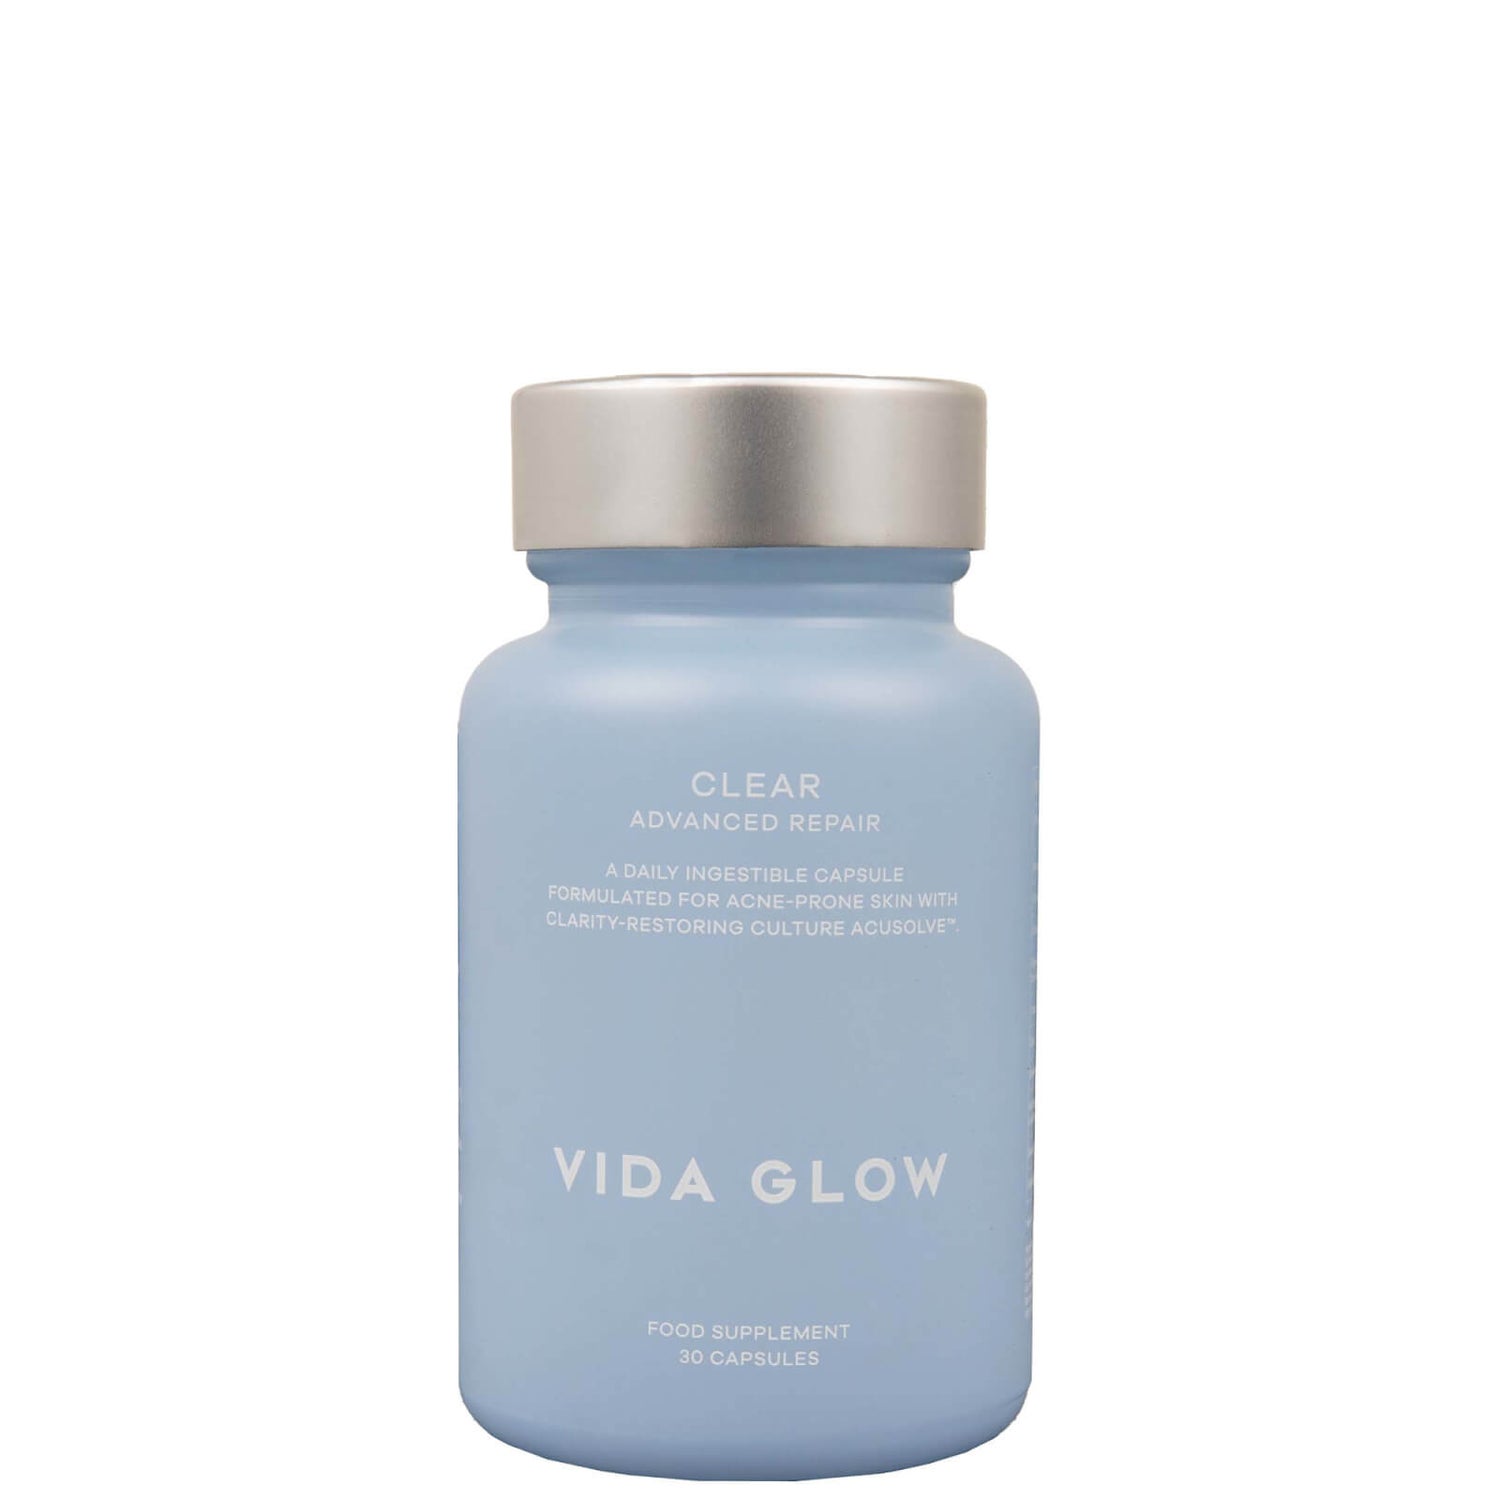 Vida Glow Clear Advanced Repair Range Supplements (30 Capsules)